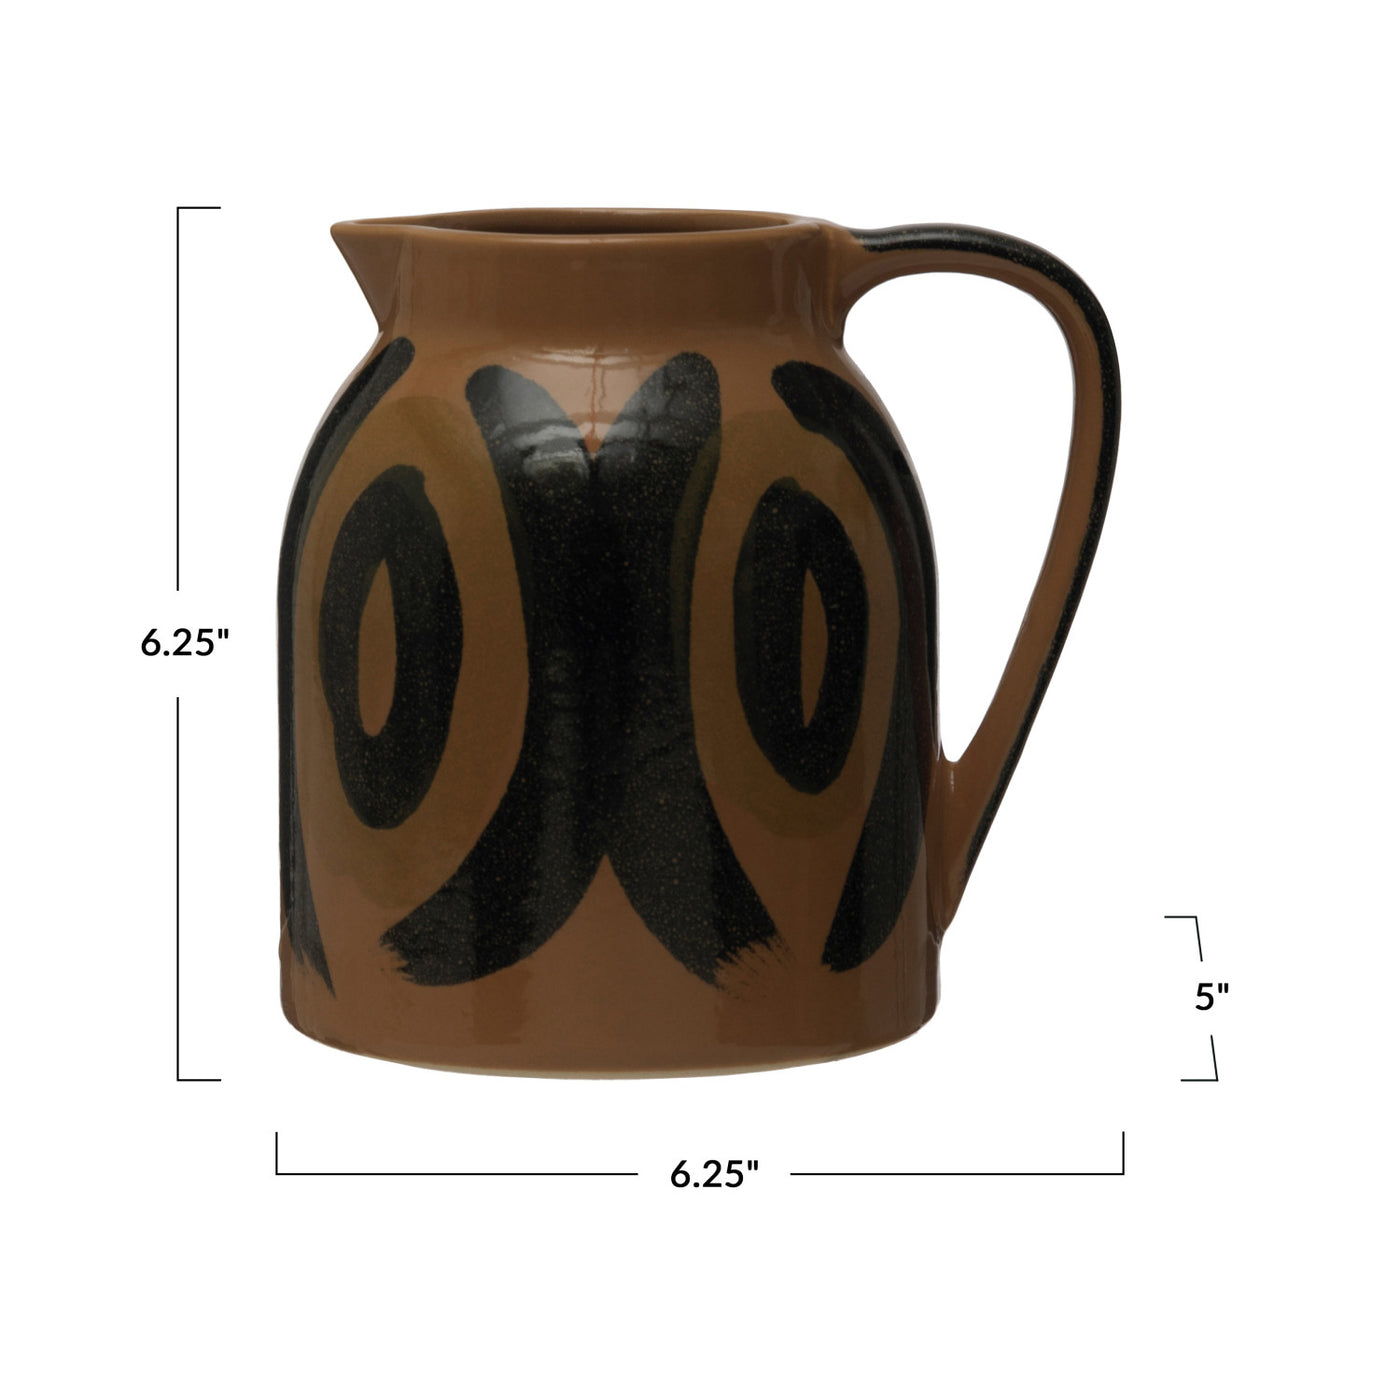 Decorative Hand-Painted Stoneware Pitcher/Vase